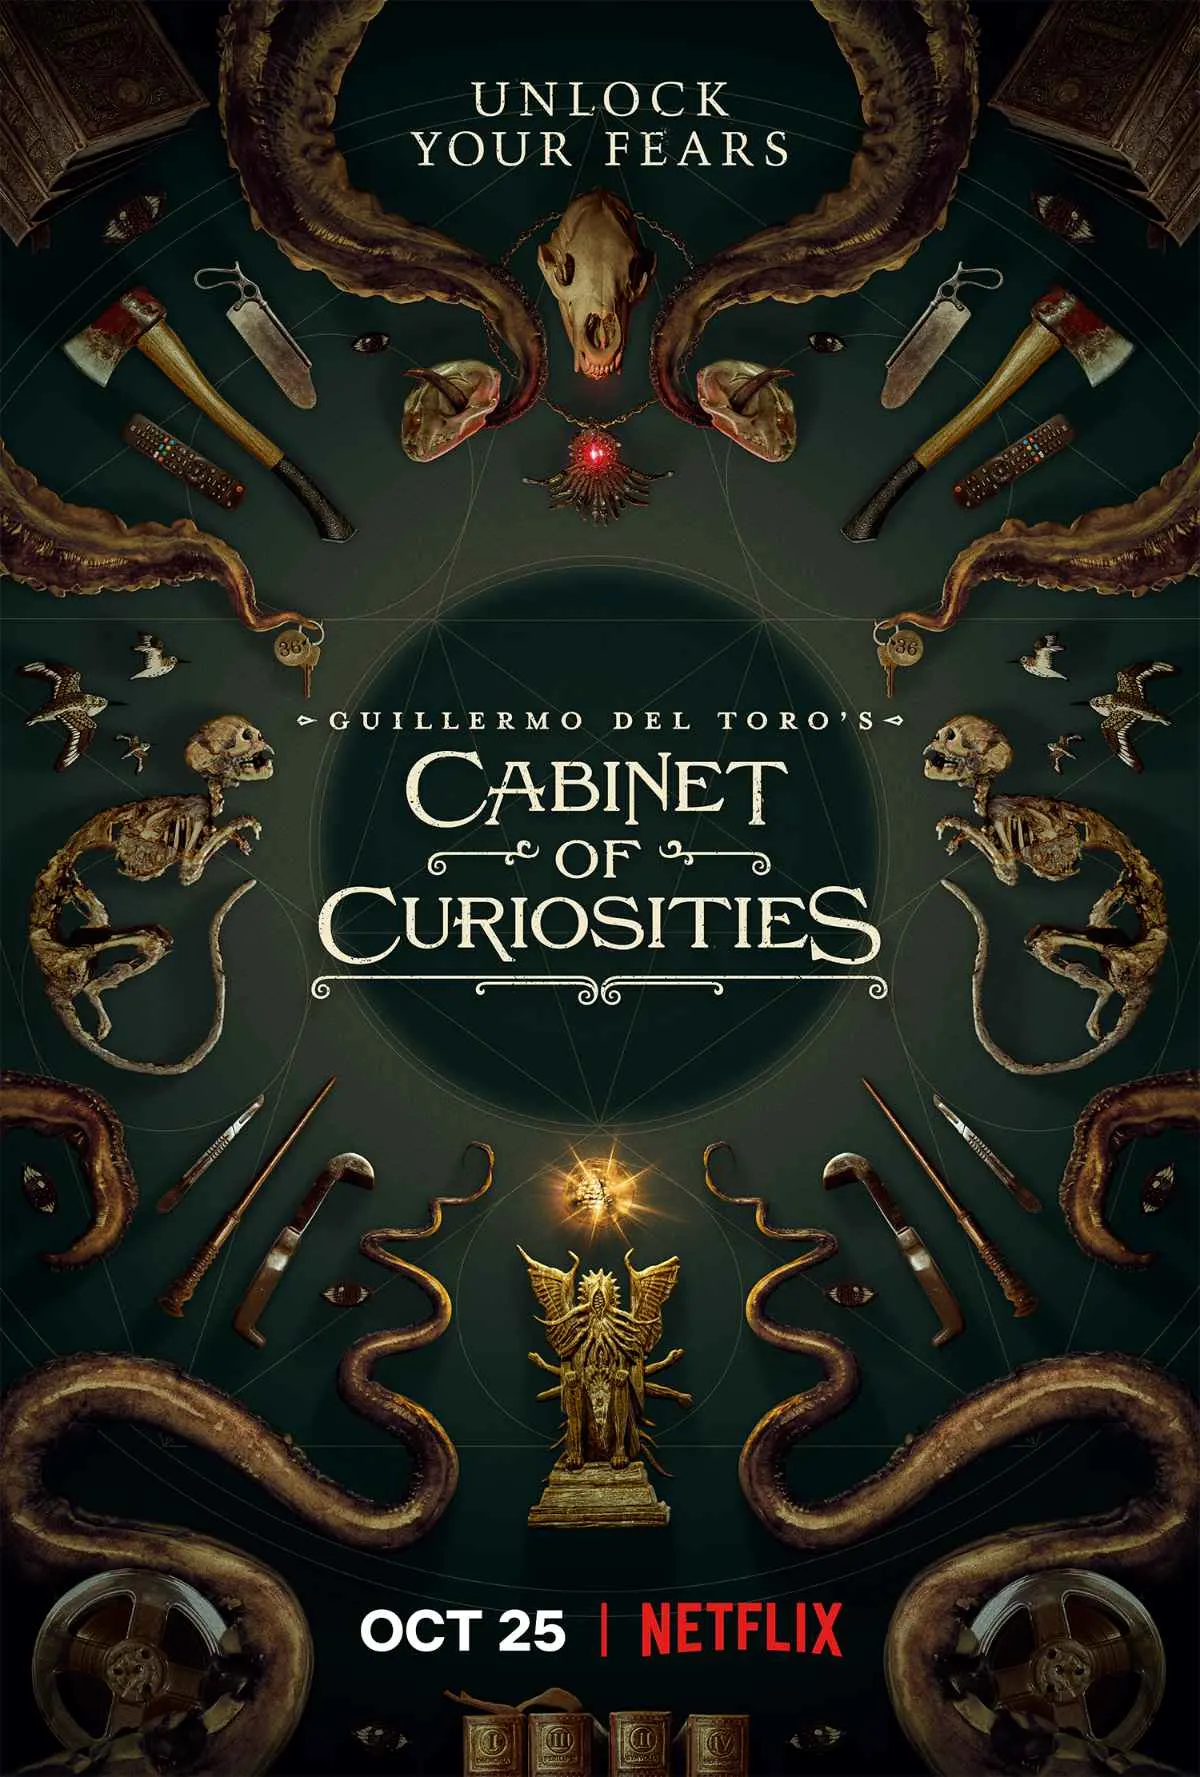 Guillermo del Toro's Cabinet of Curiosities Trailer